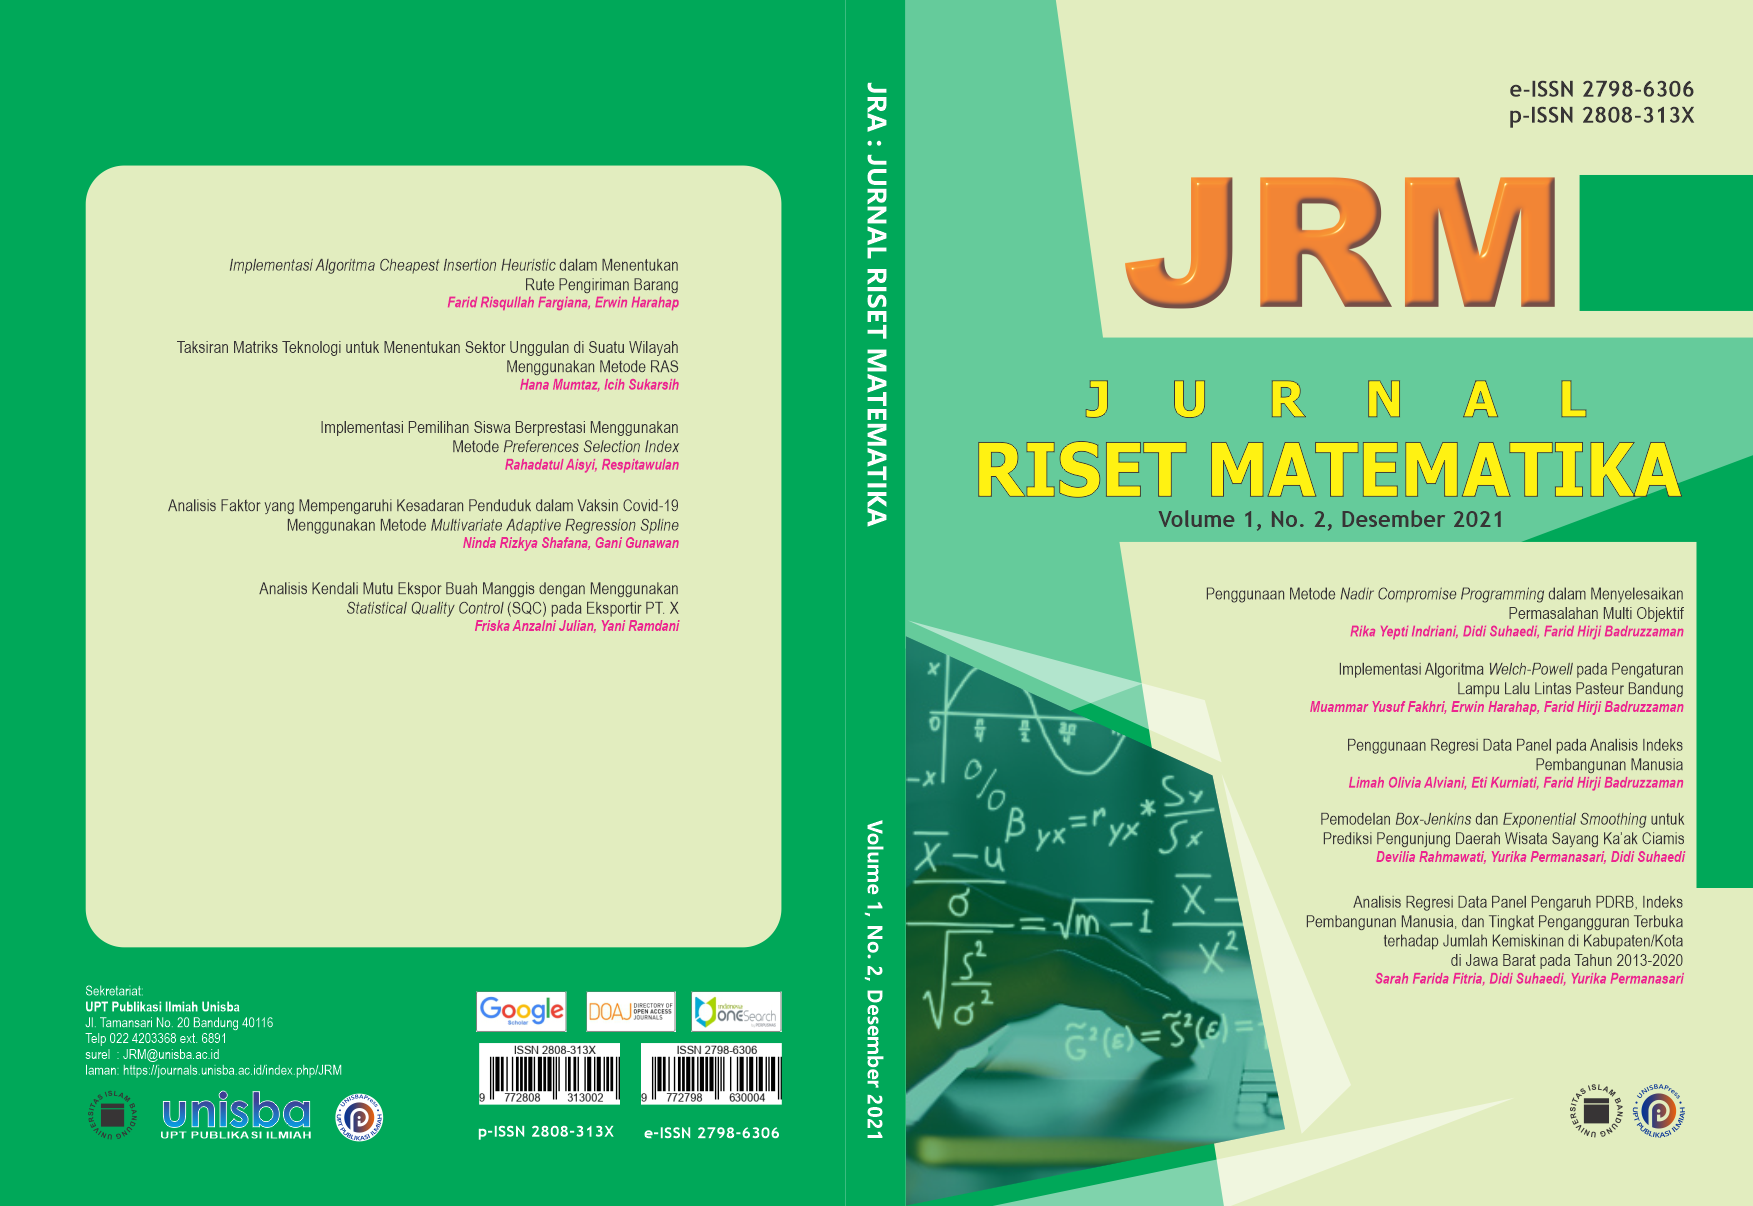 					View Volume 1, No.2, Desember 2021, Jurnal Riset Matematika (JRM)
				